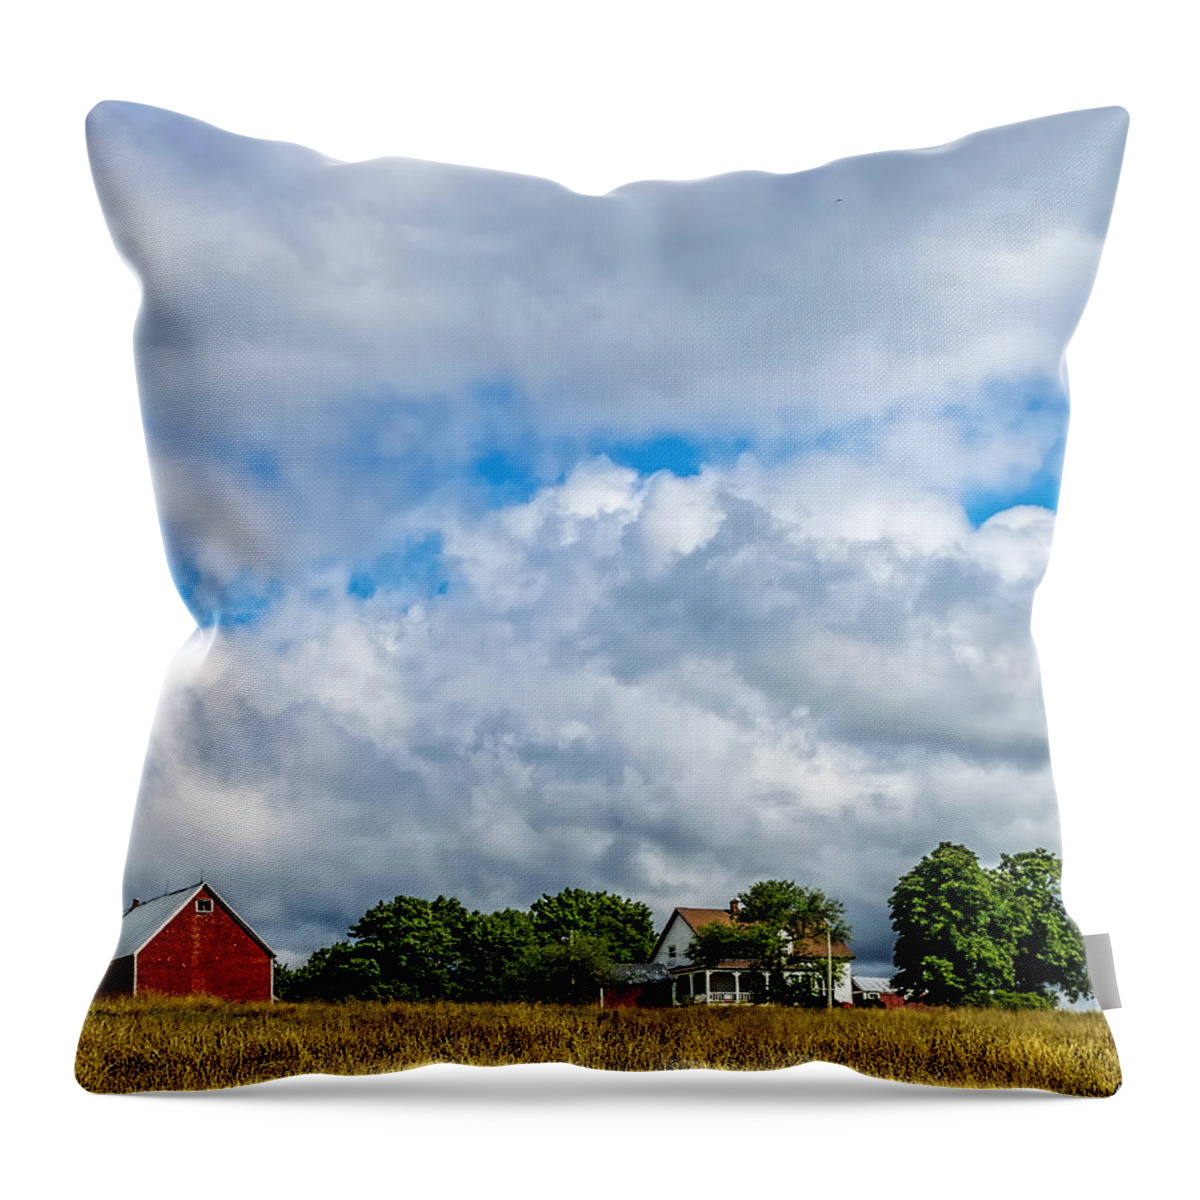 2014 Throw Pillow featuring the photograph Farm in Cape Breton by Ken Morris